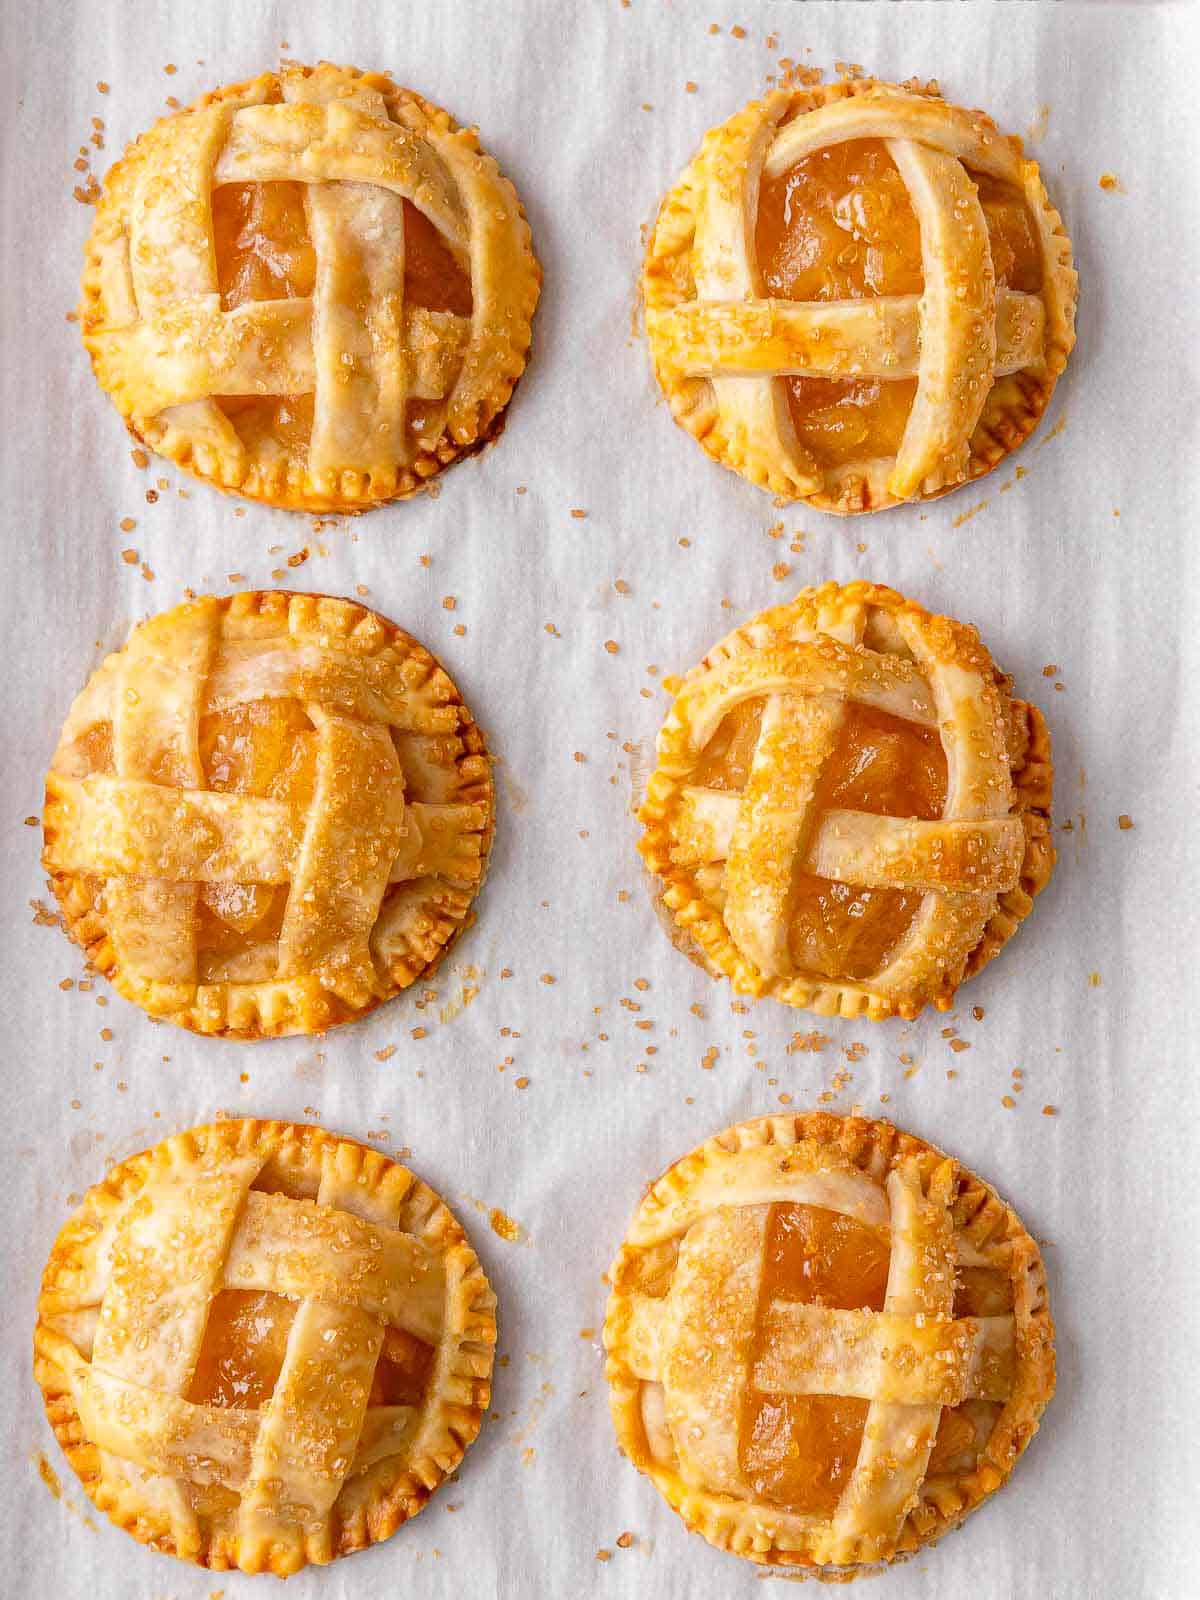 6 baked mini apple pies on a baking sheet pan after baking